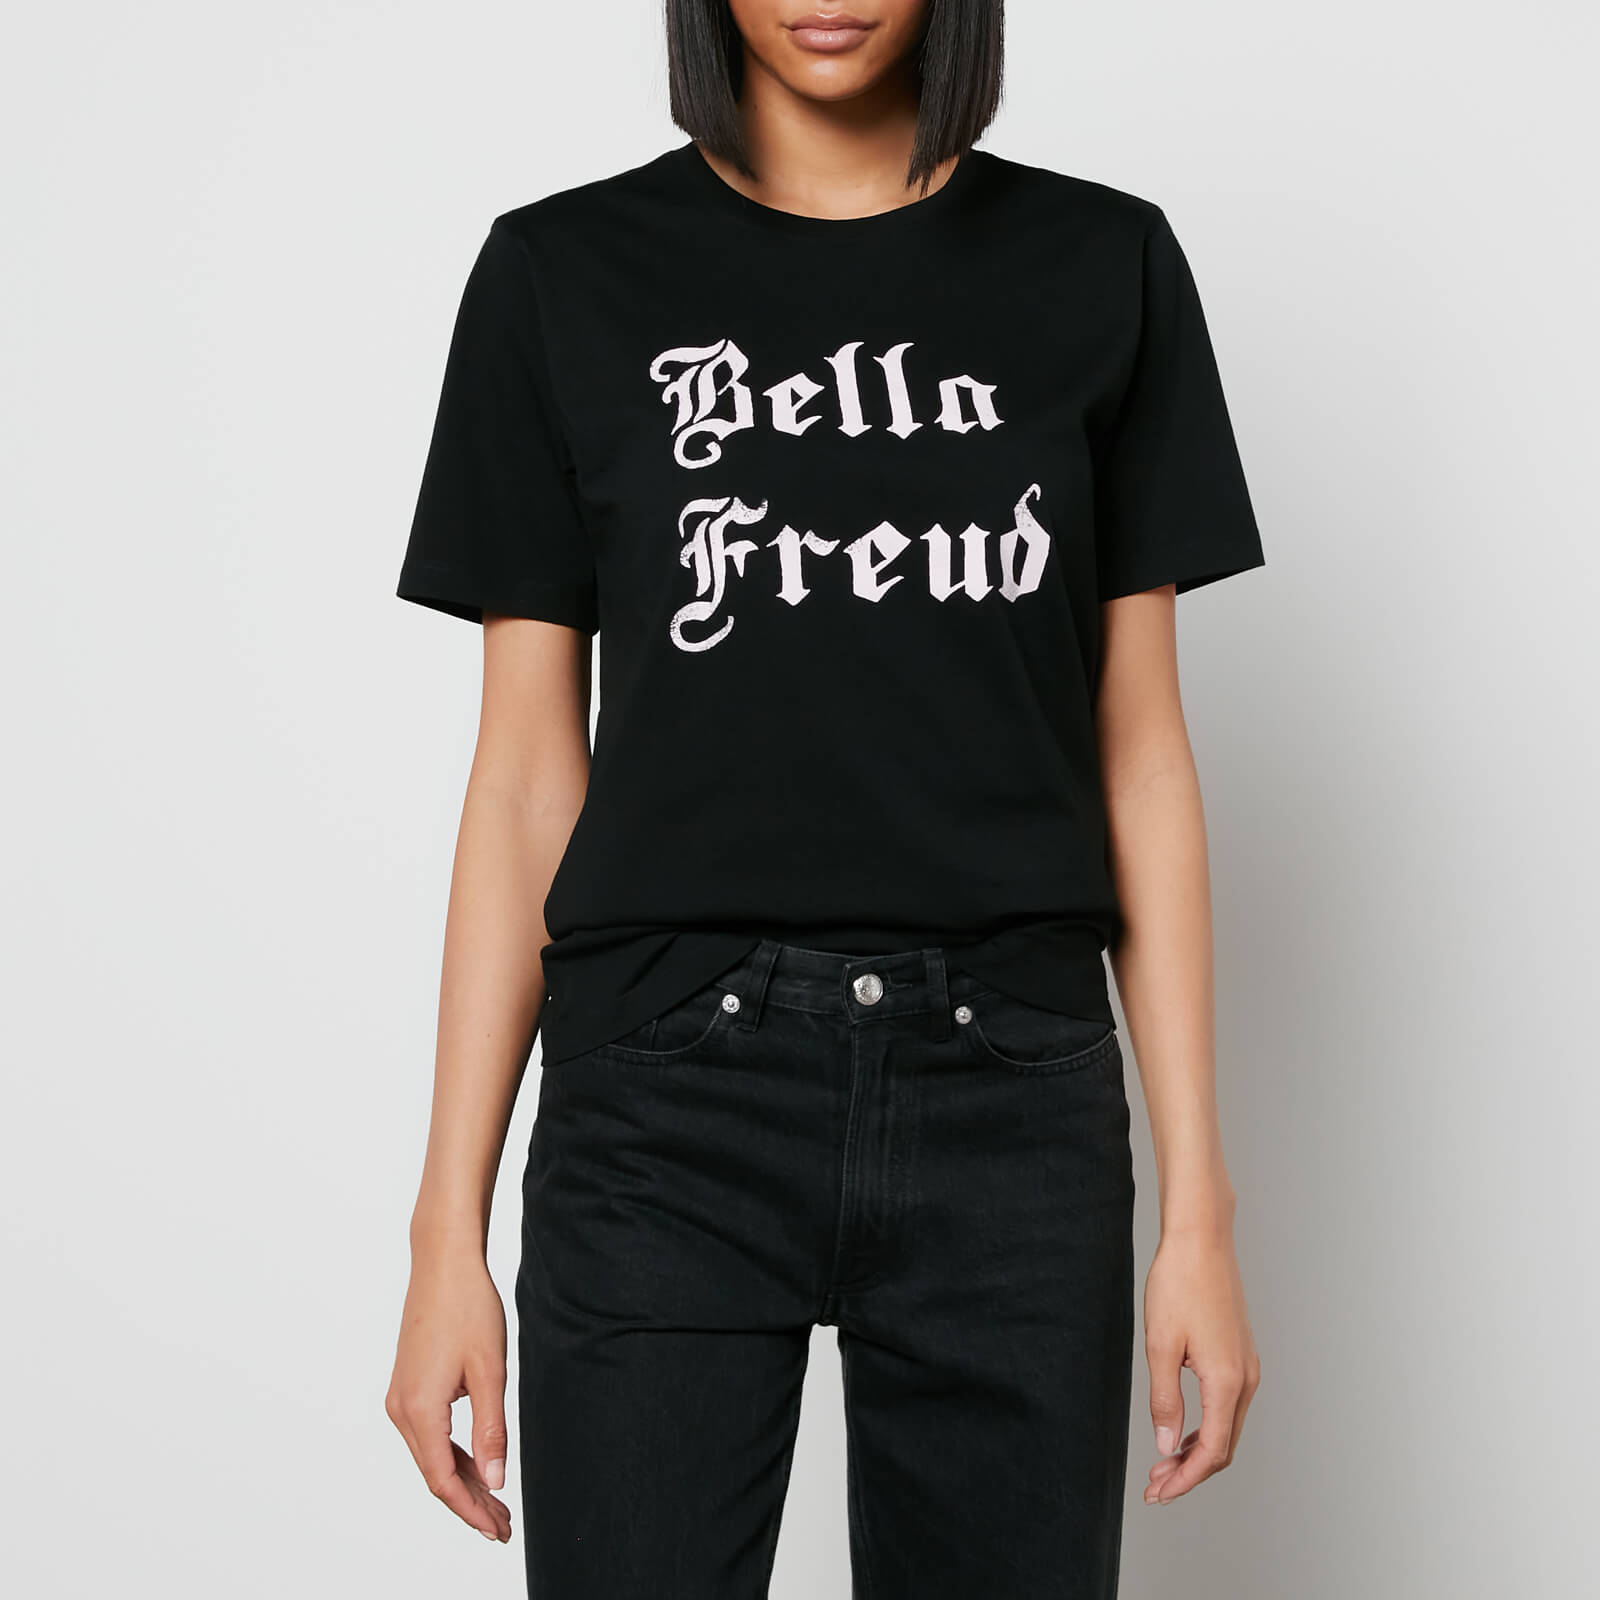 Bella Freud Women's Gothic T Shirt - Black - XS